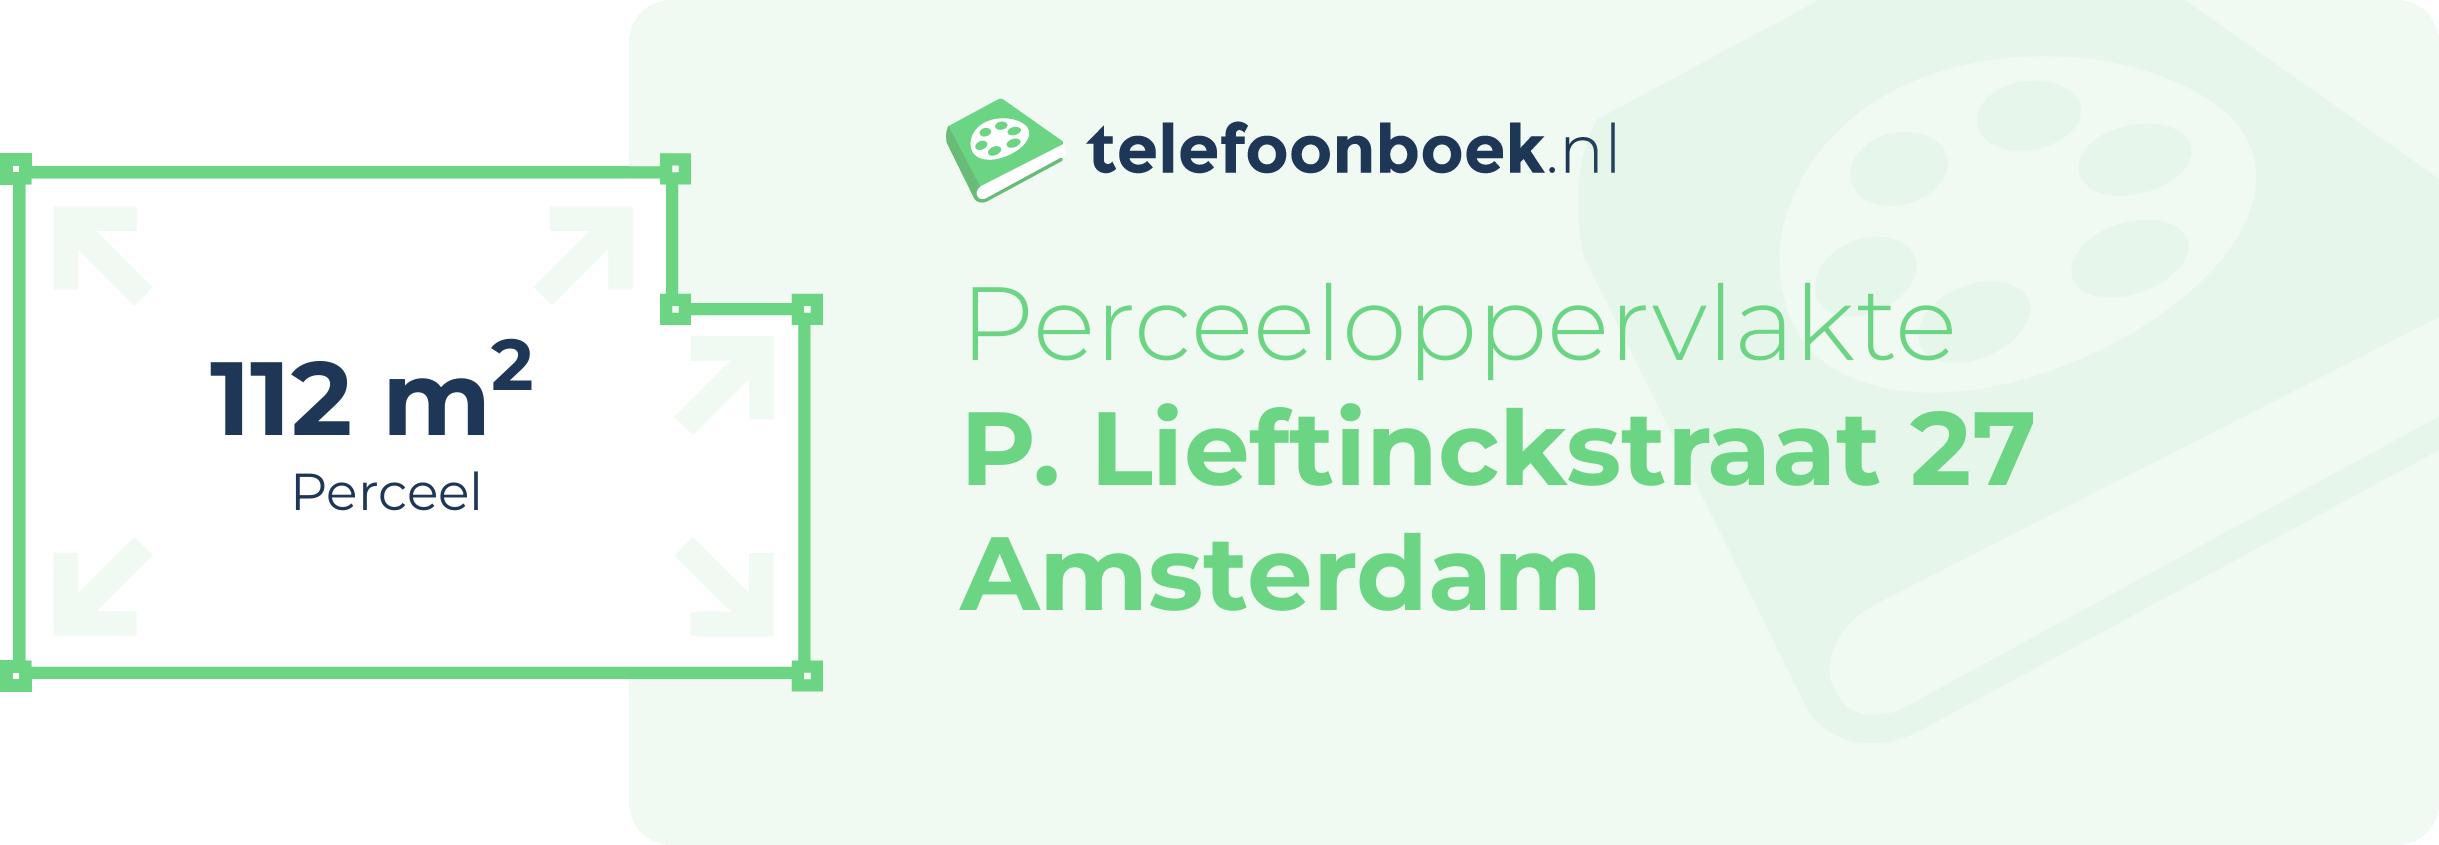 Perceeloppervlakte P. Lieftinckstraat 27 Amsterdam